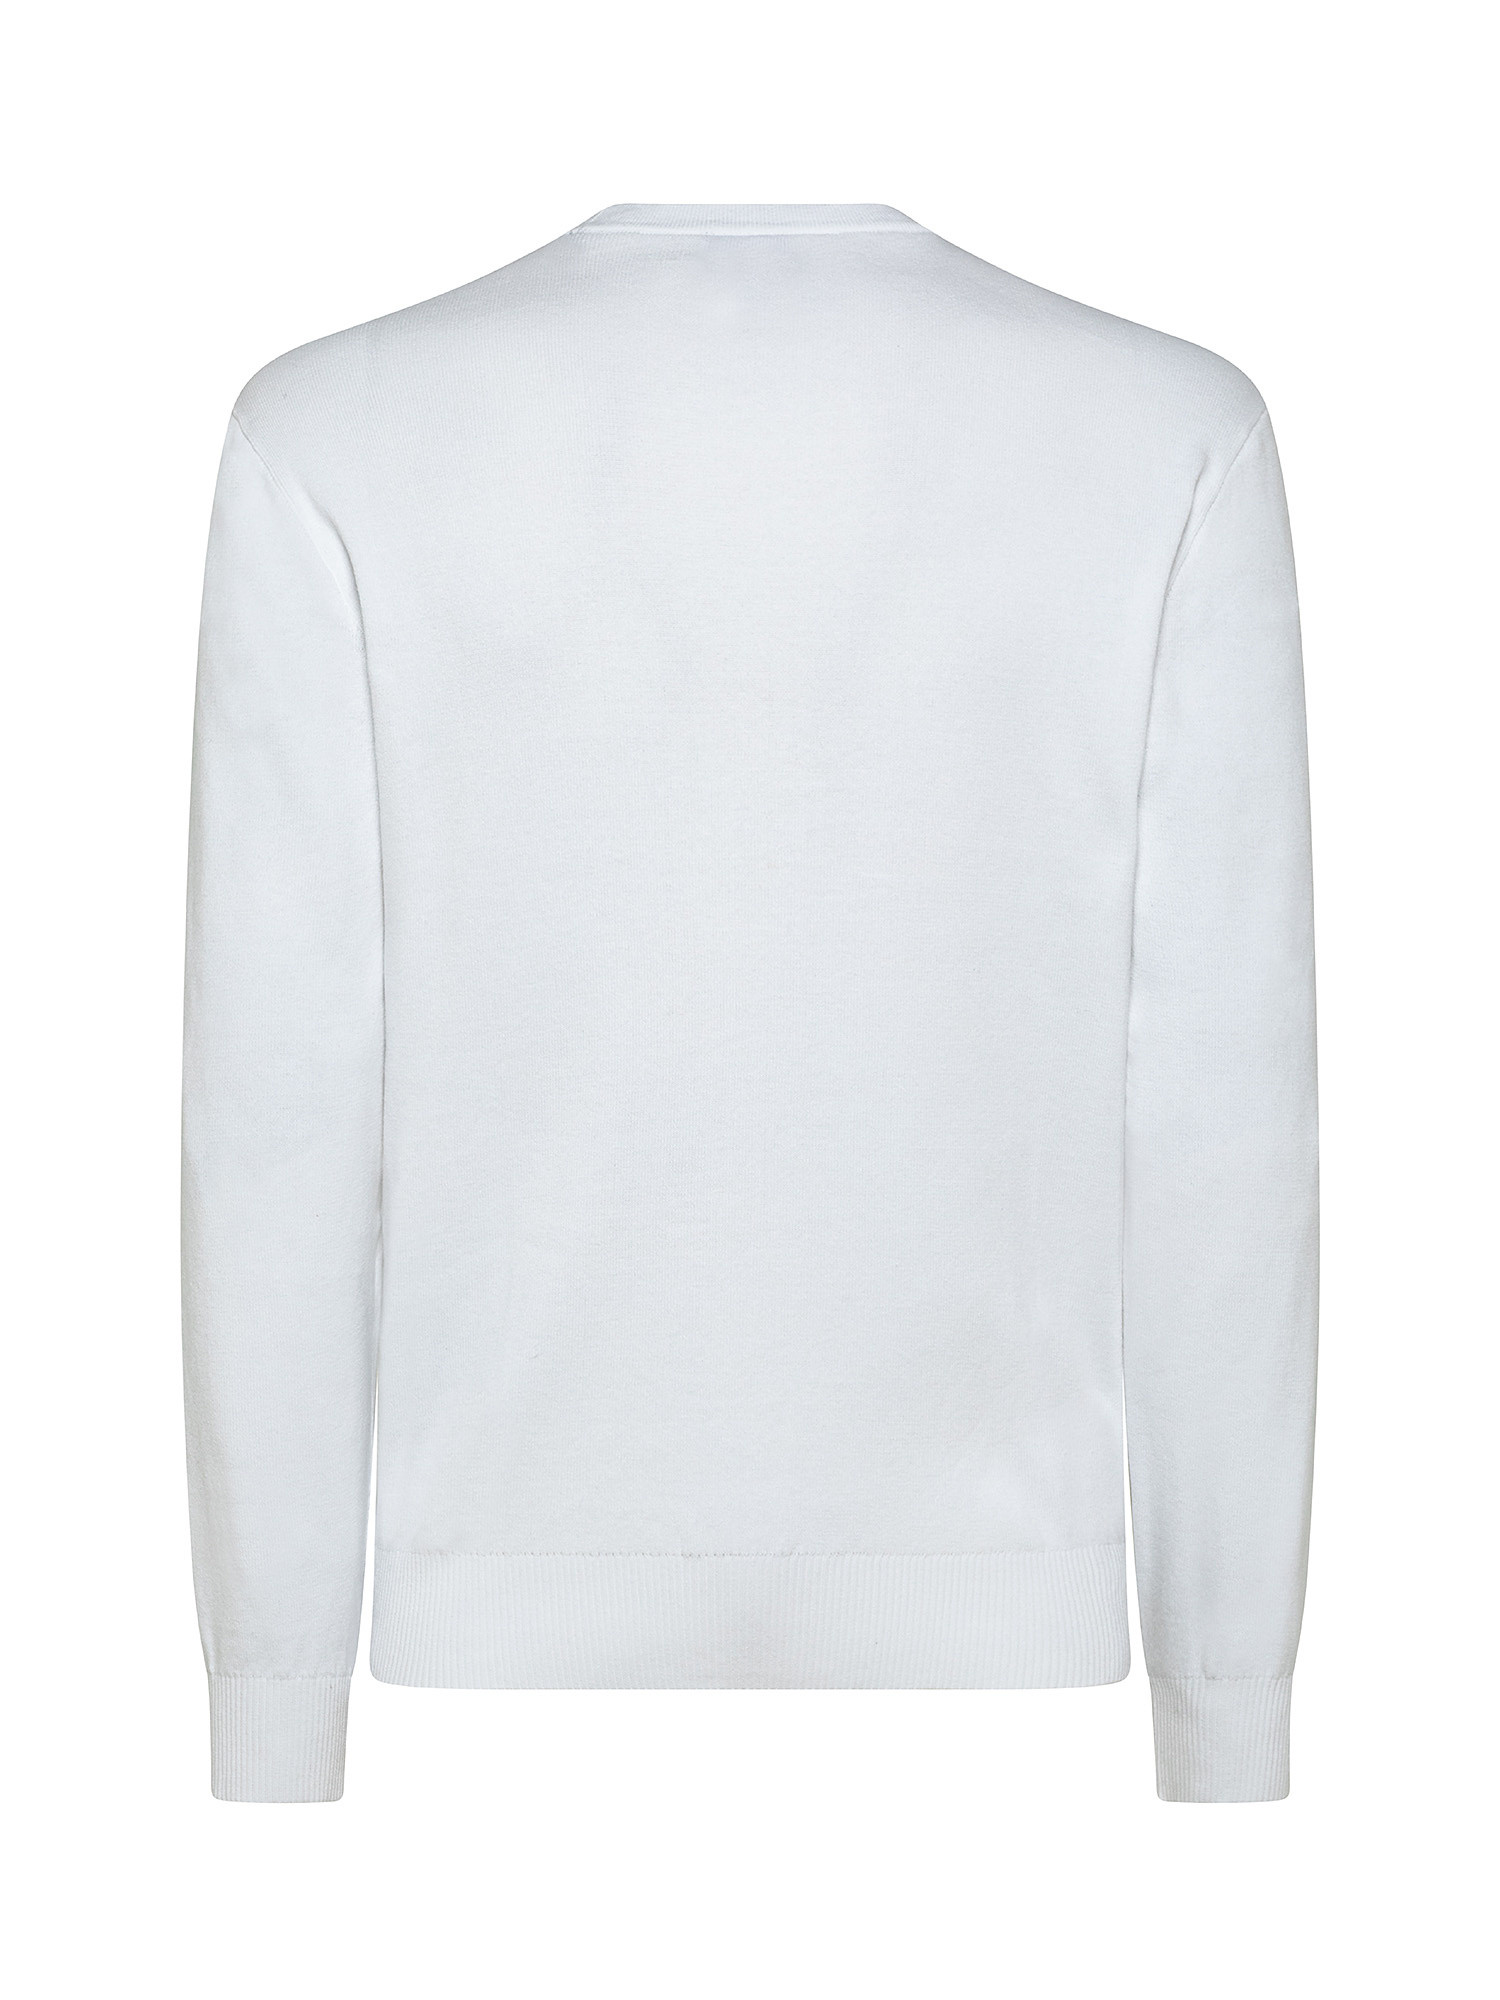 Pullover, Bianco, large image number 1